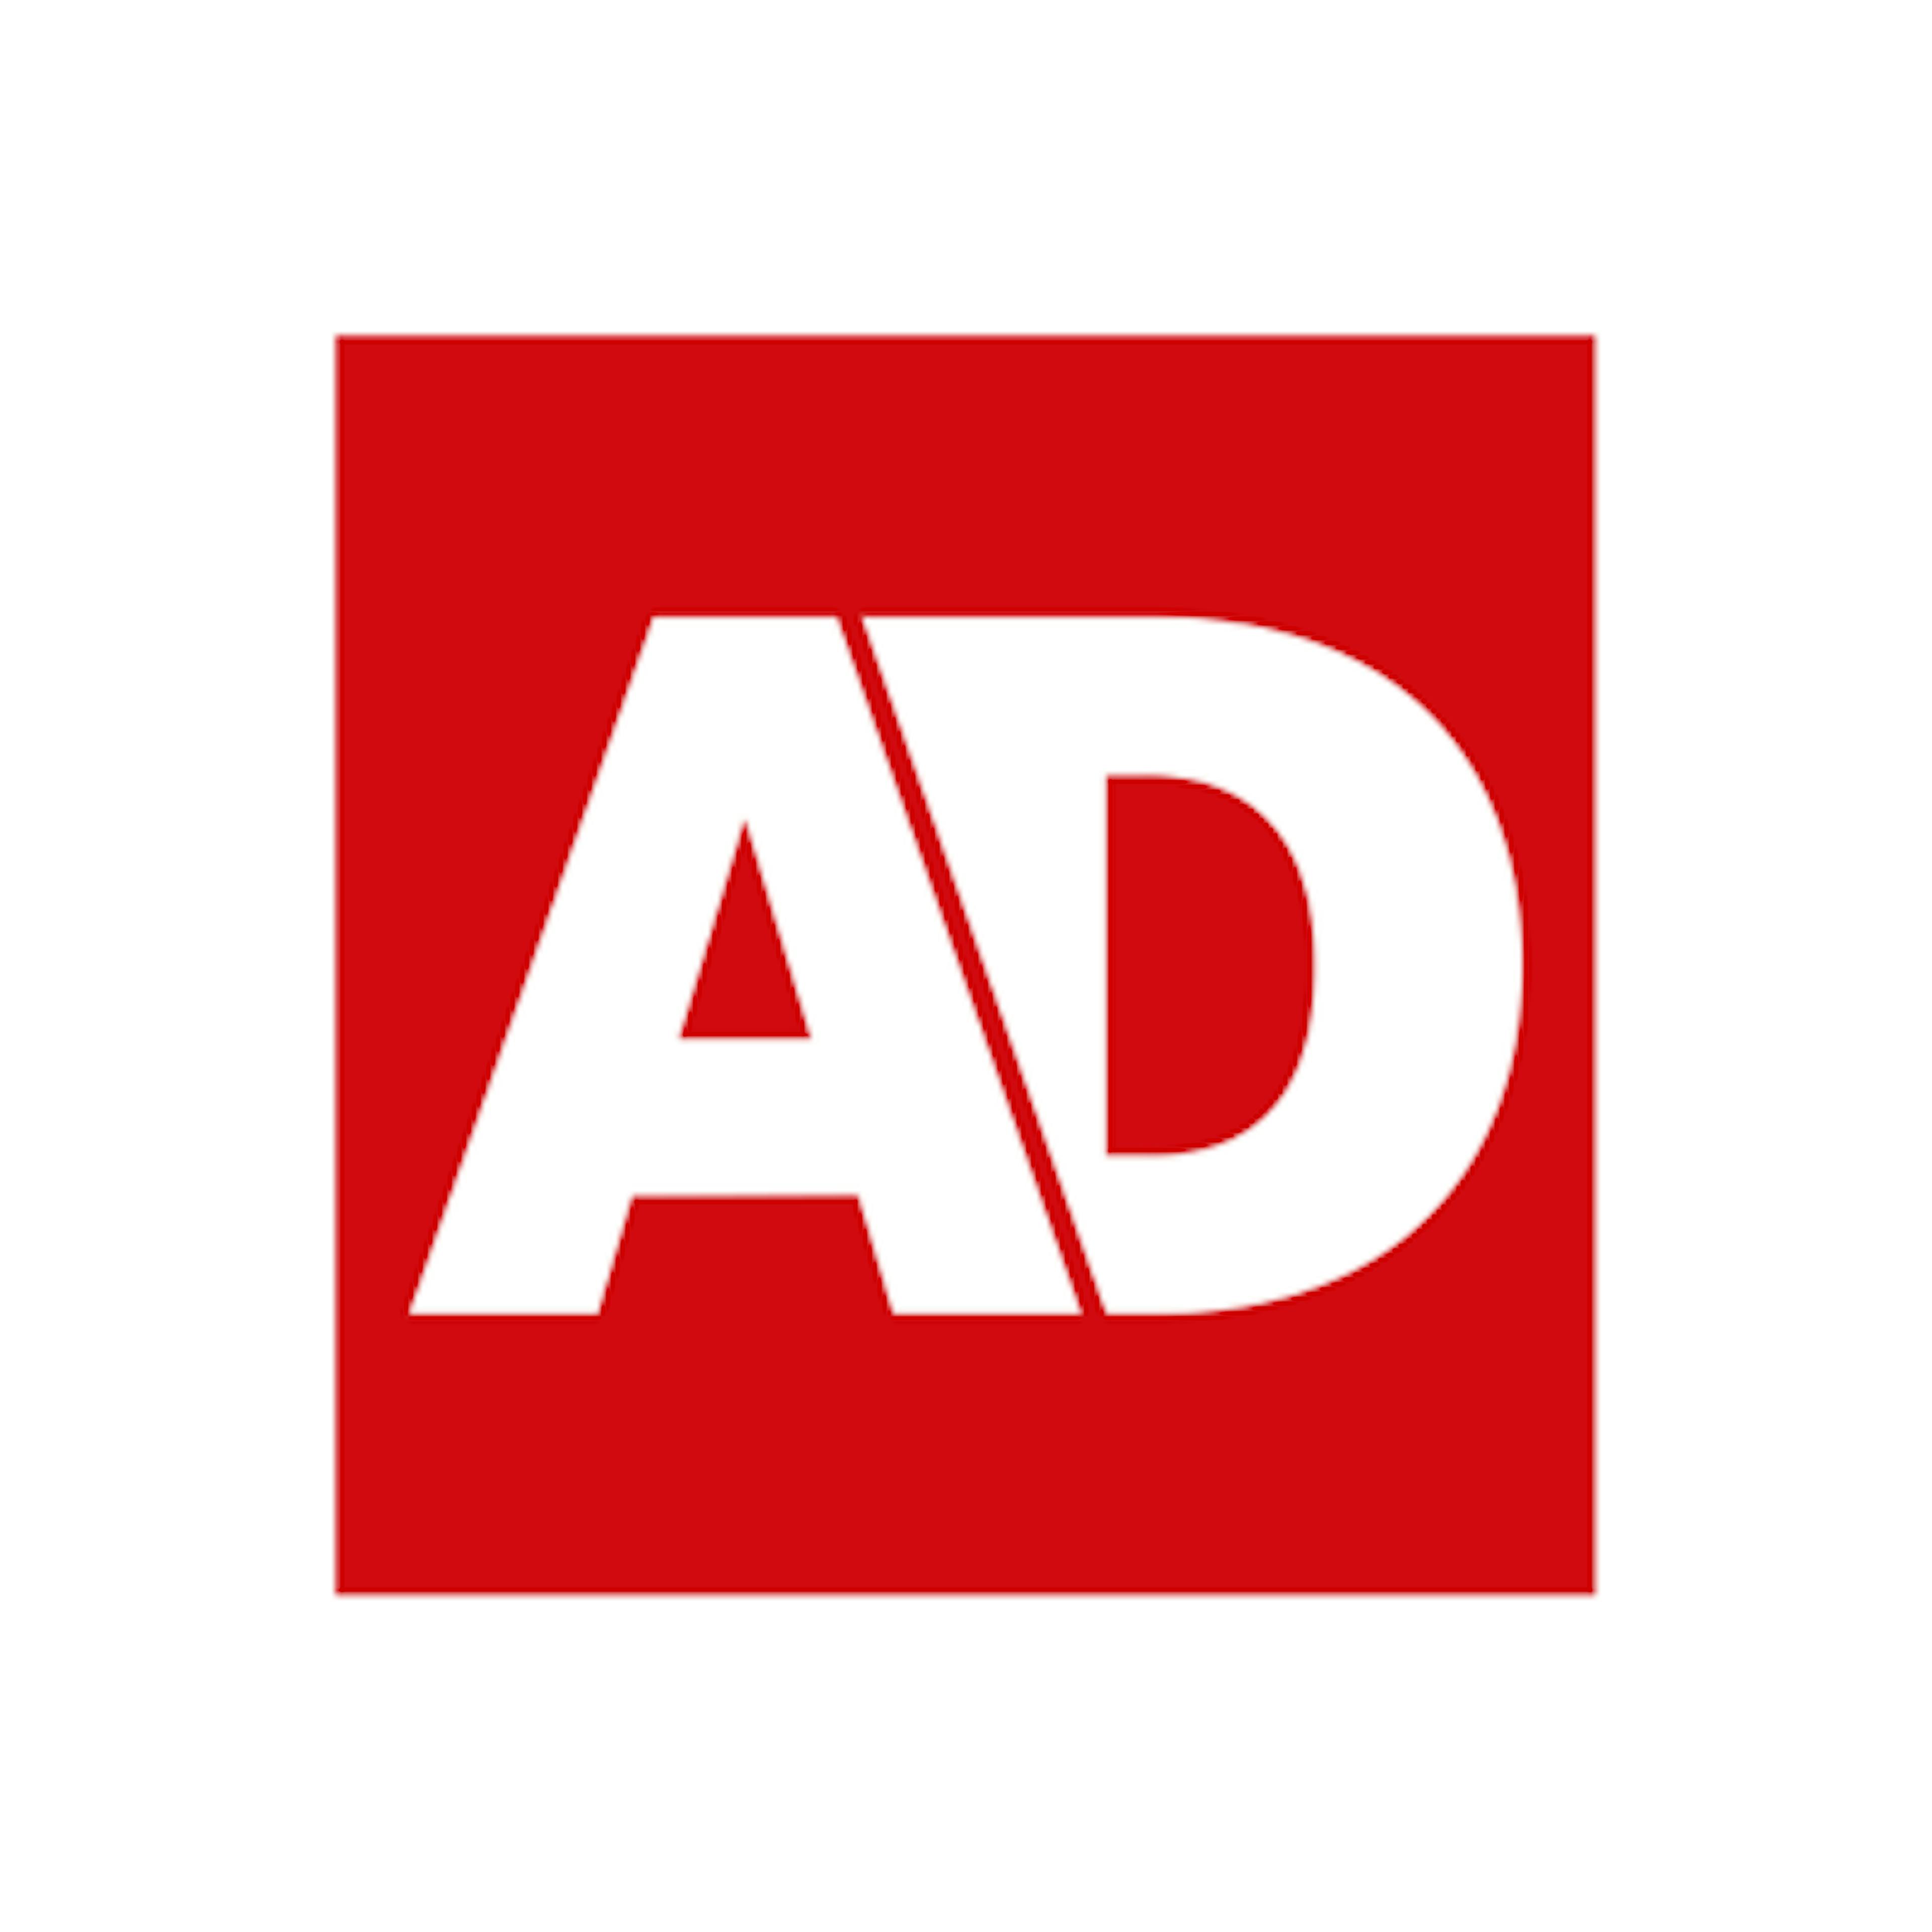 Logo Algemeen Dagblad